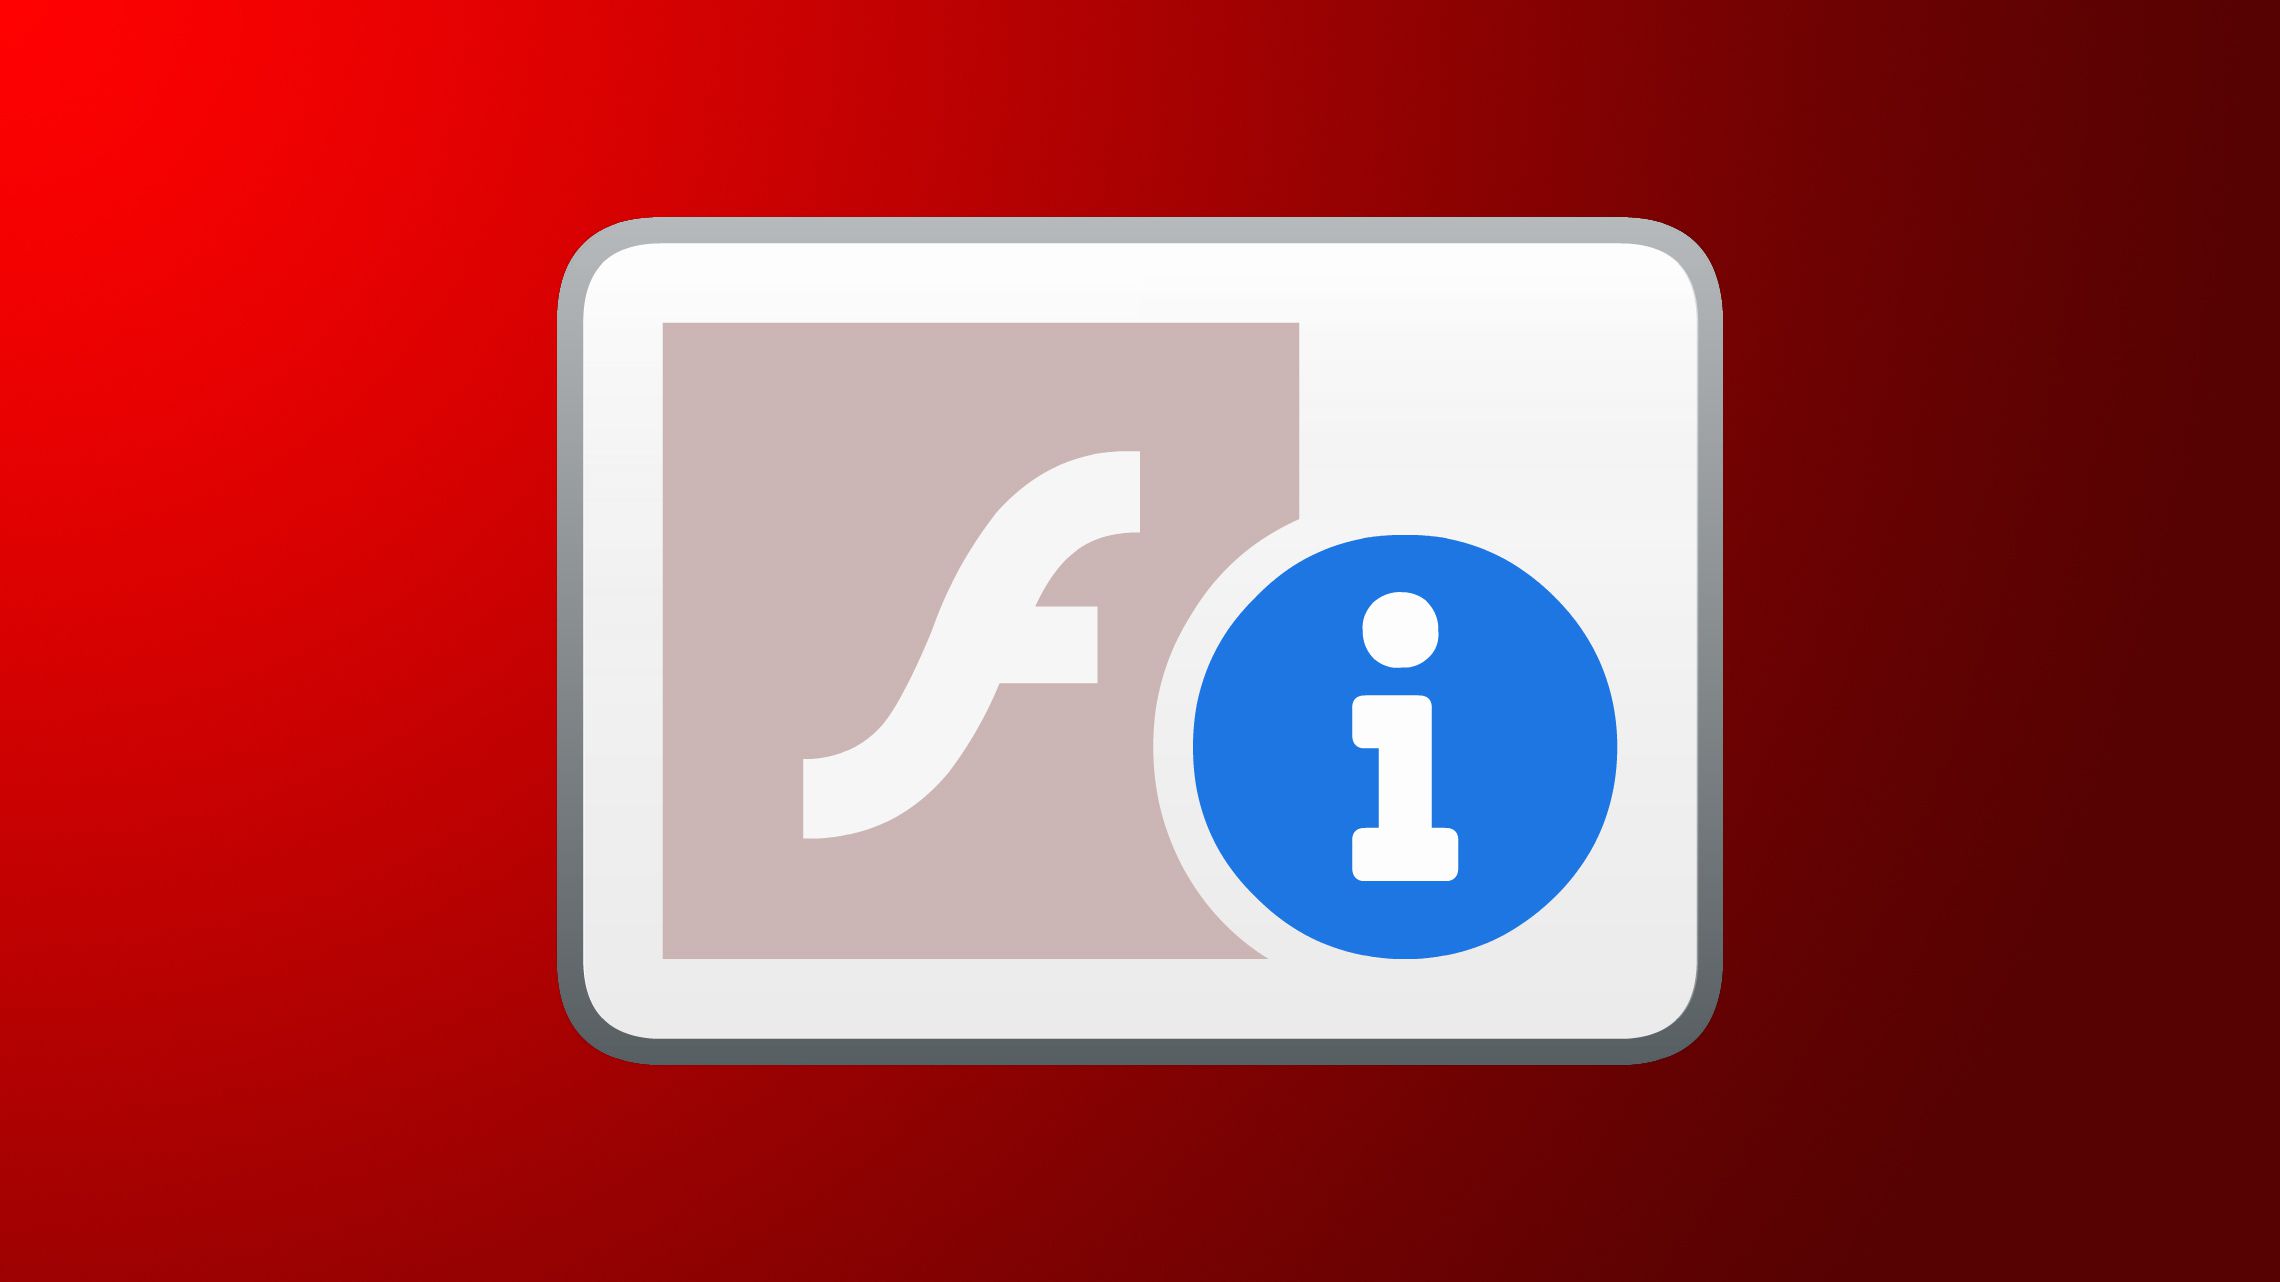 adobe flash download for mac 10.6.8